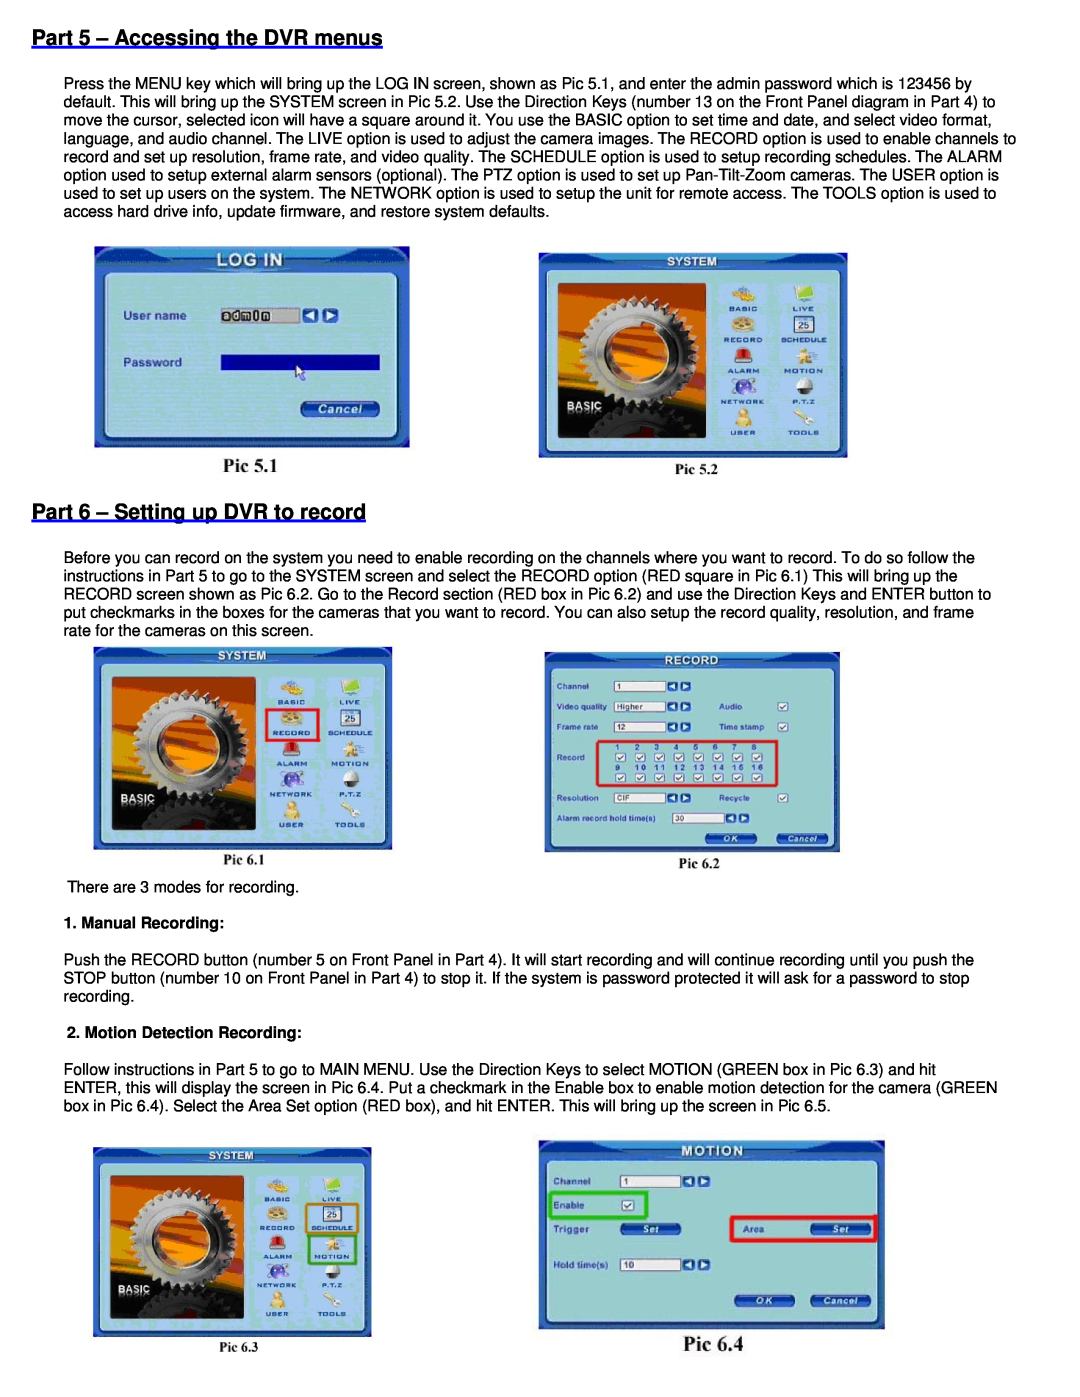 Q-See QSD2316C8-500 manual Part 5 - Accessing the DVR menus, Part 6 - Setting up DVR to record, Manual Recording 